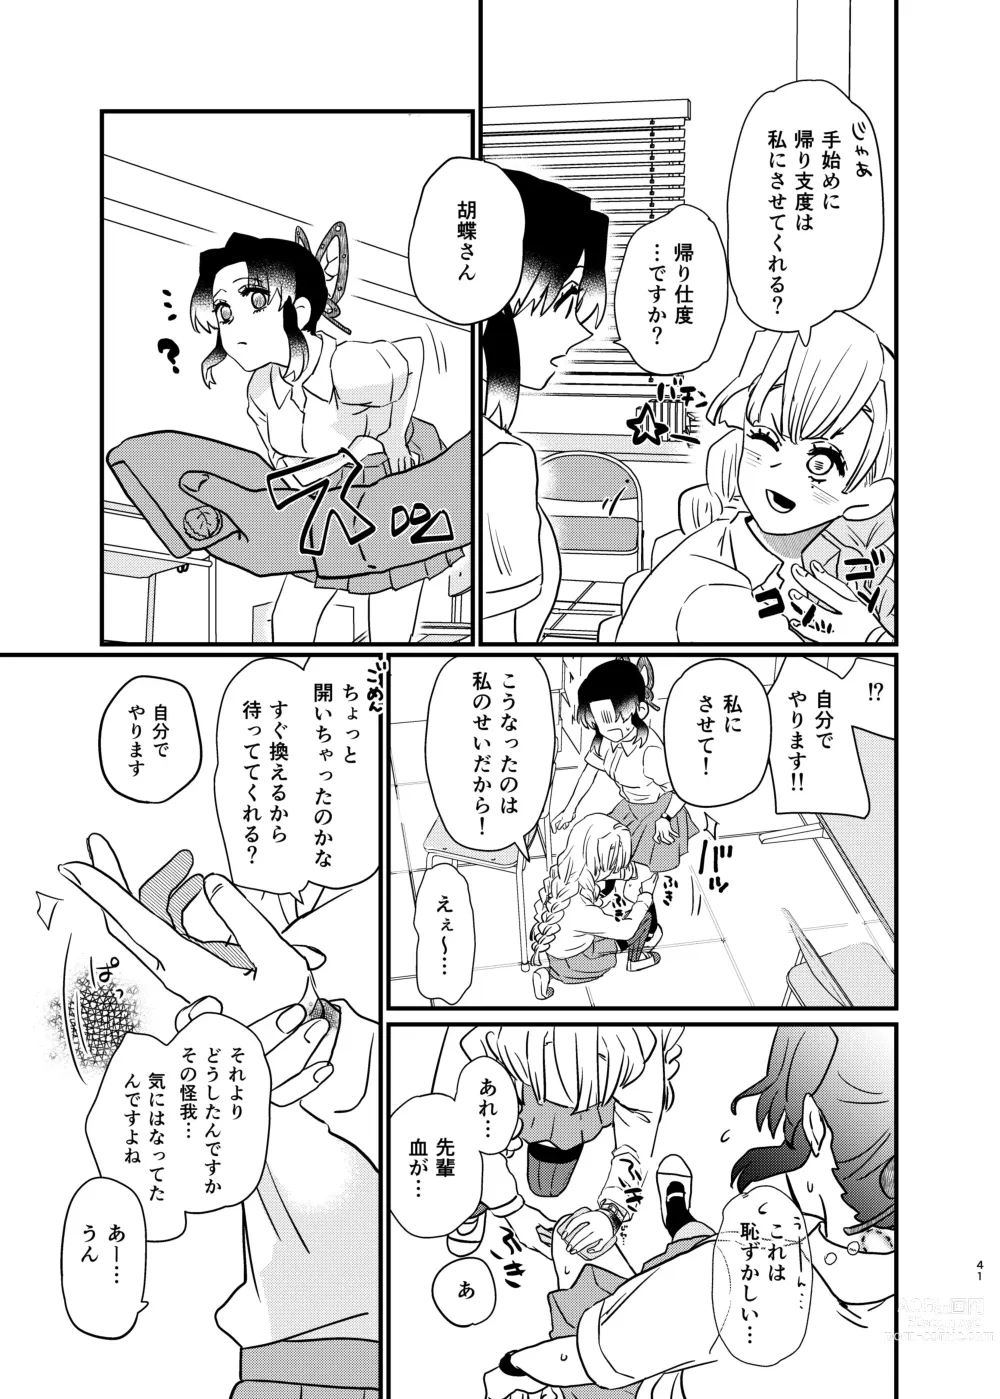 Page 41 of doujinshi Watashi no Alpha